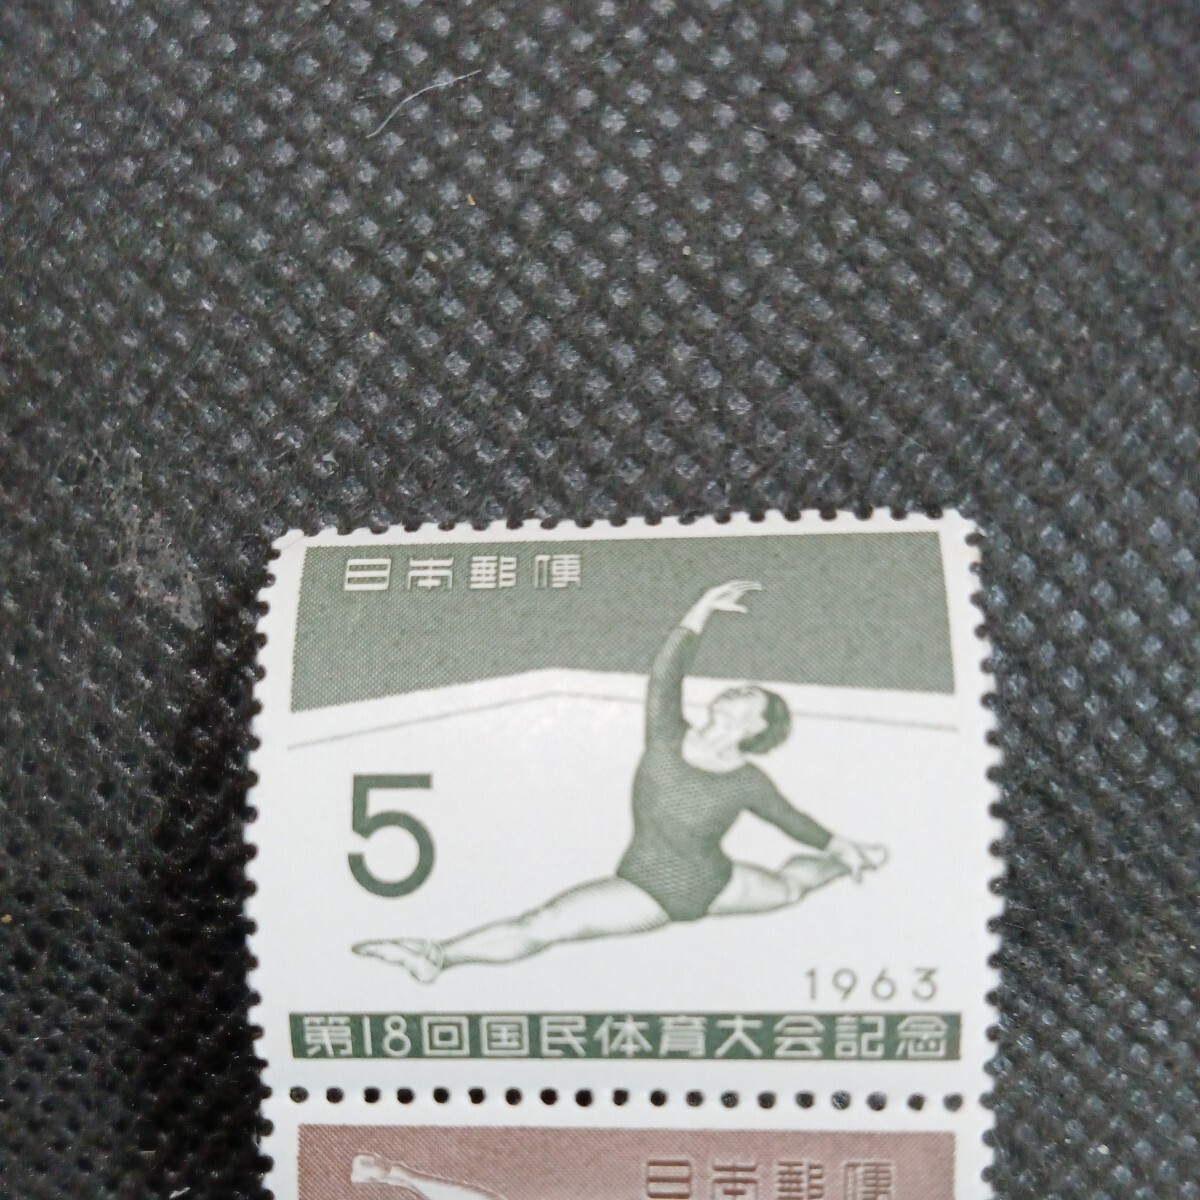 銘版（大蔵省印刷局製造)第18回国民体育大会記念1963 5円切手2連ブロックの画像2